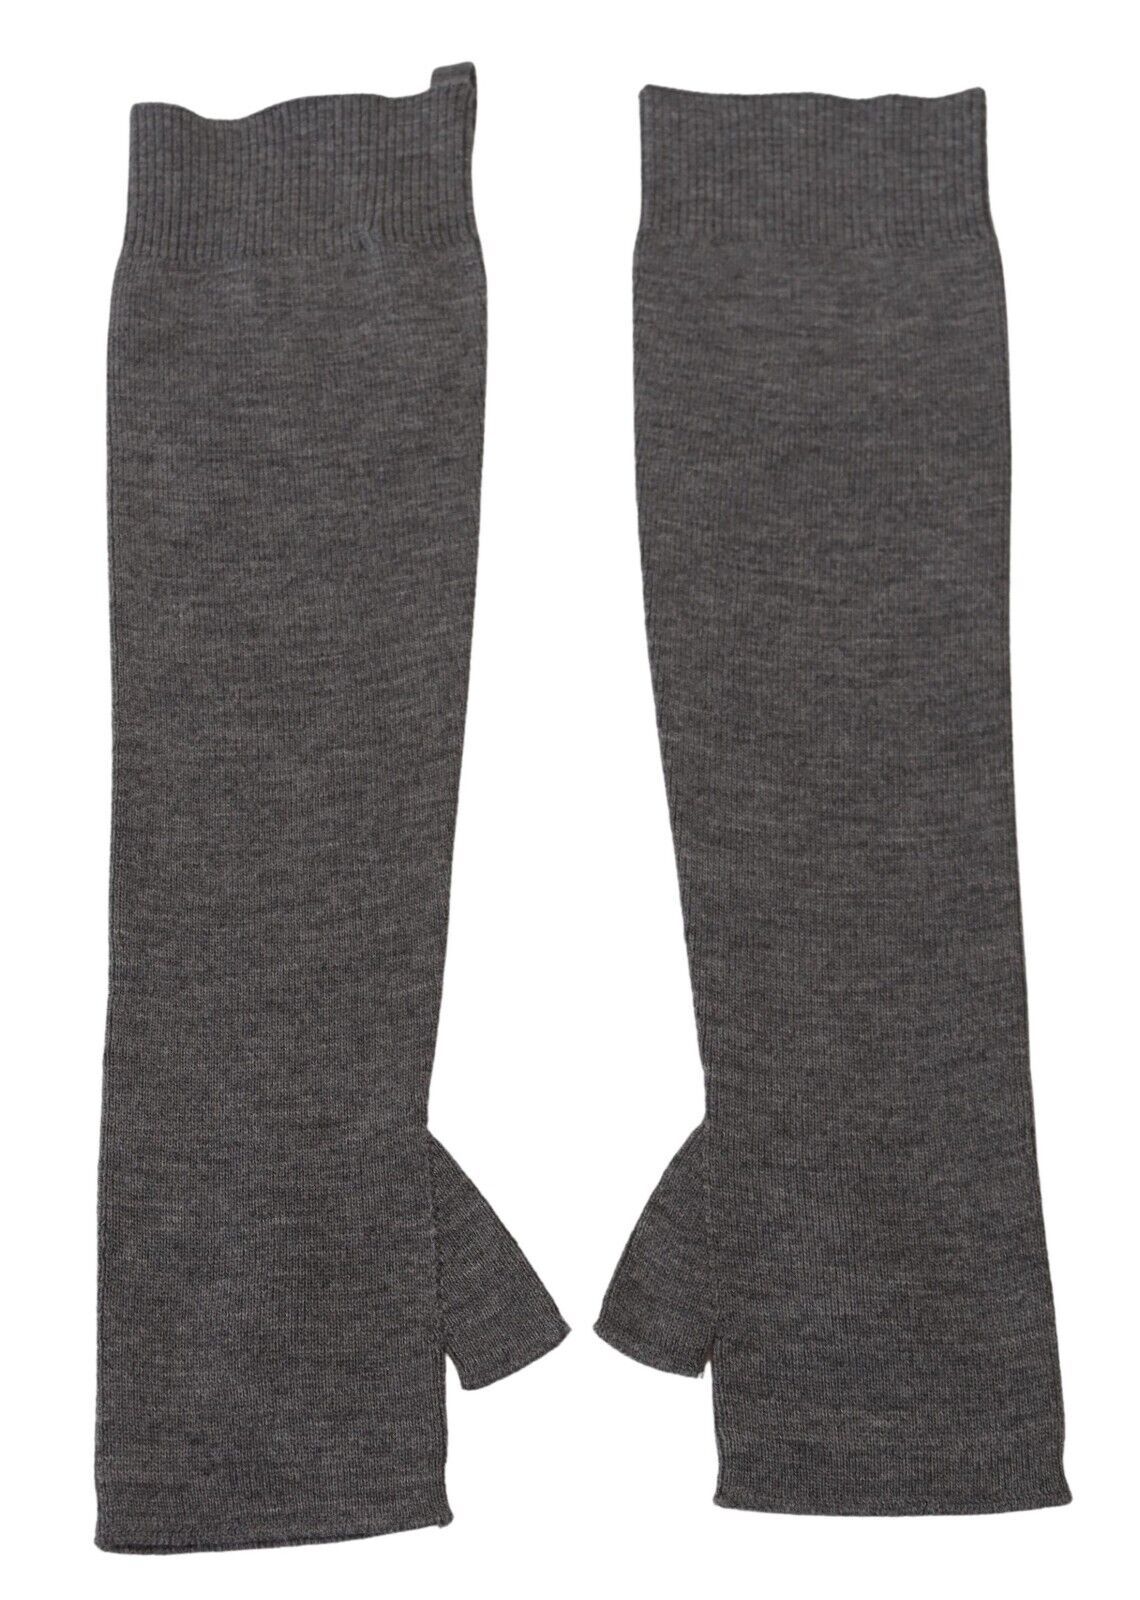 Gray Fingerless Elbow Length Wool Knit Gloves